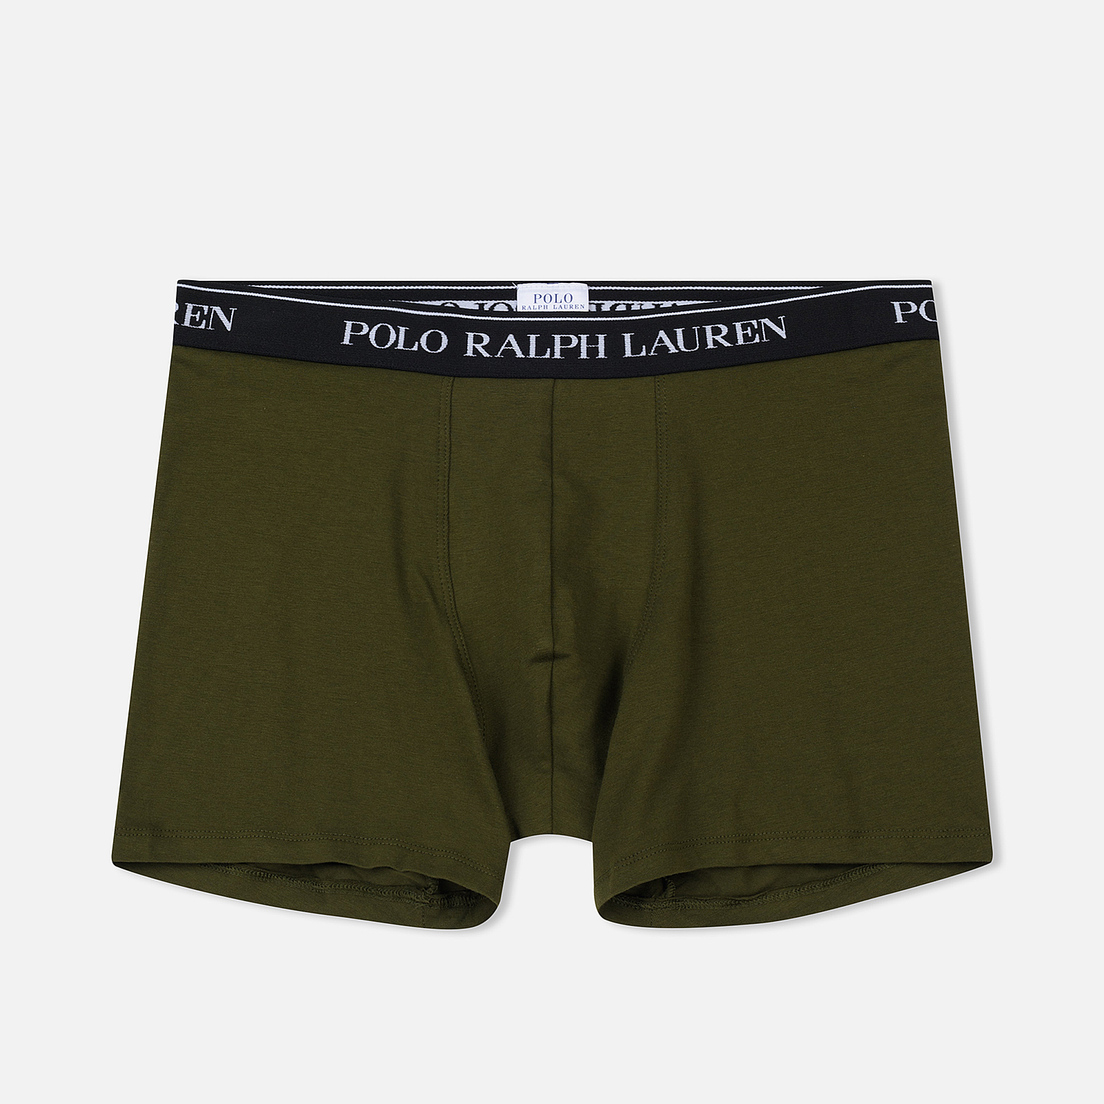 Polo Ralph Lauren Комплект мужских трусов Boxer Brief 3-Pack